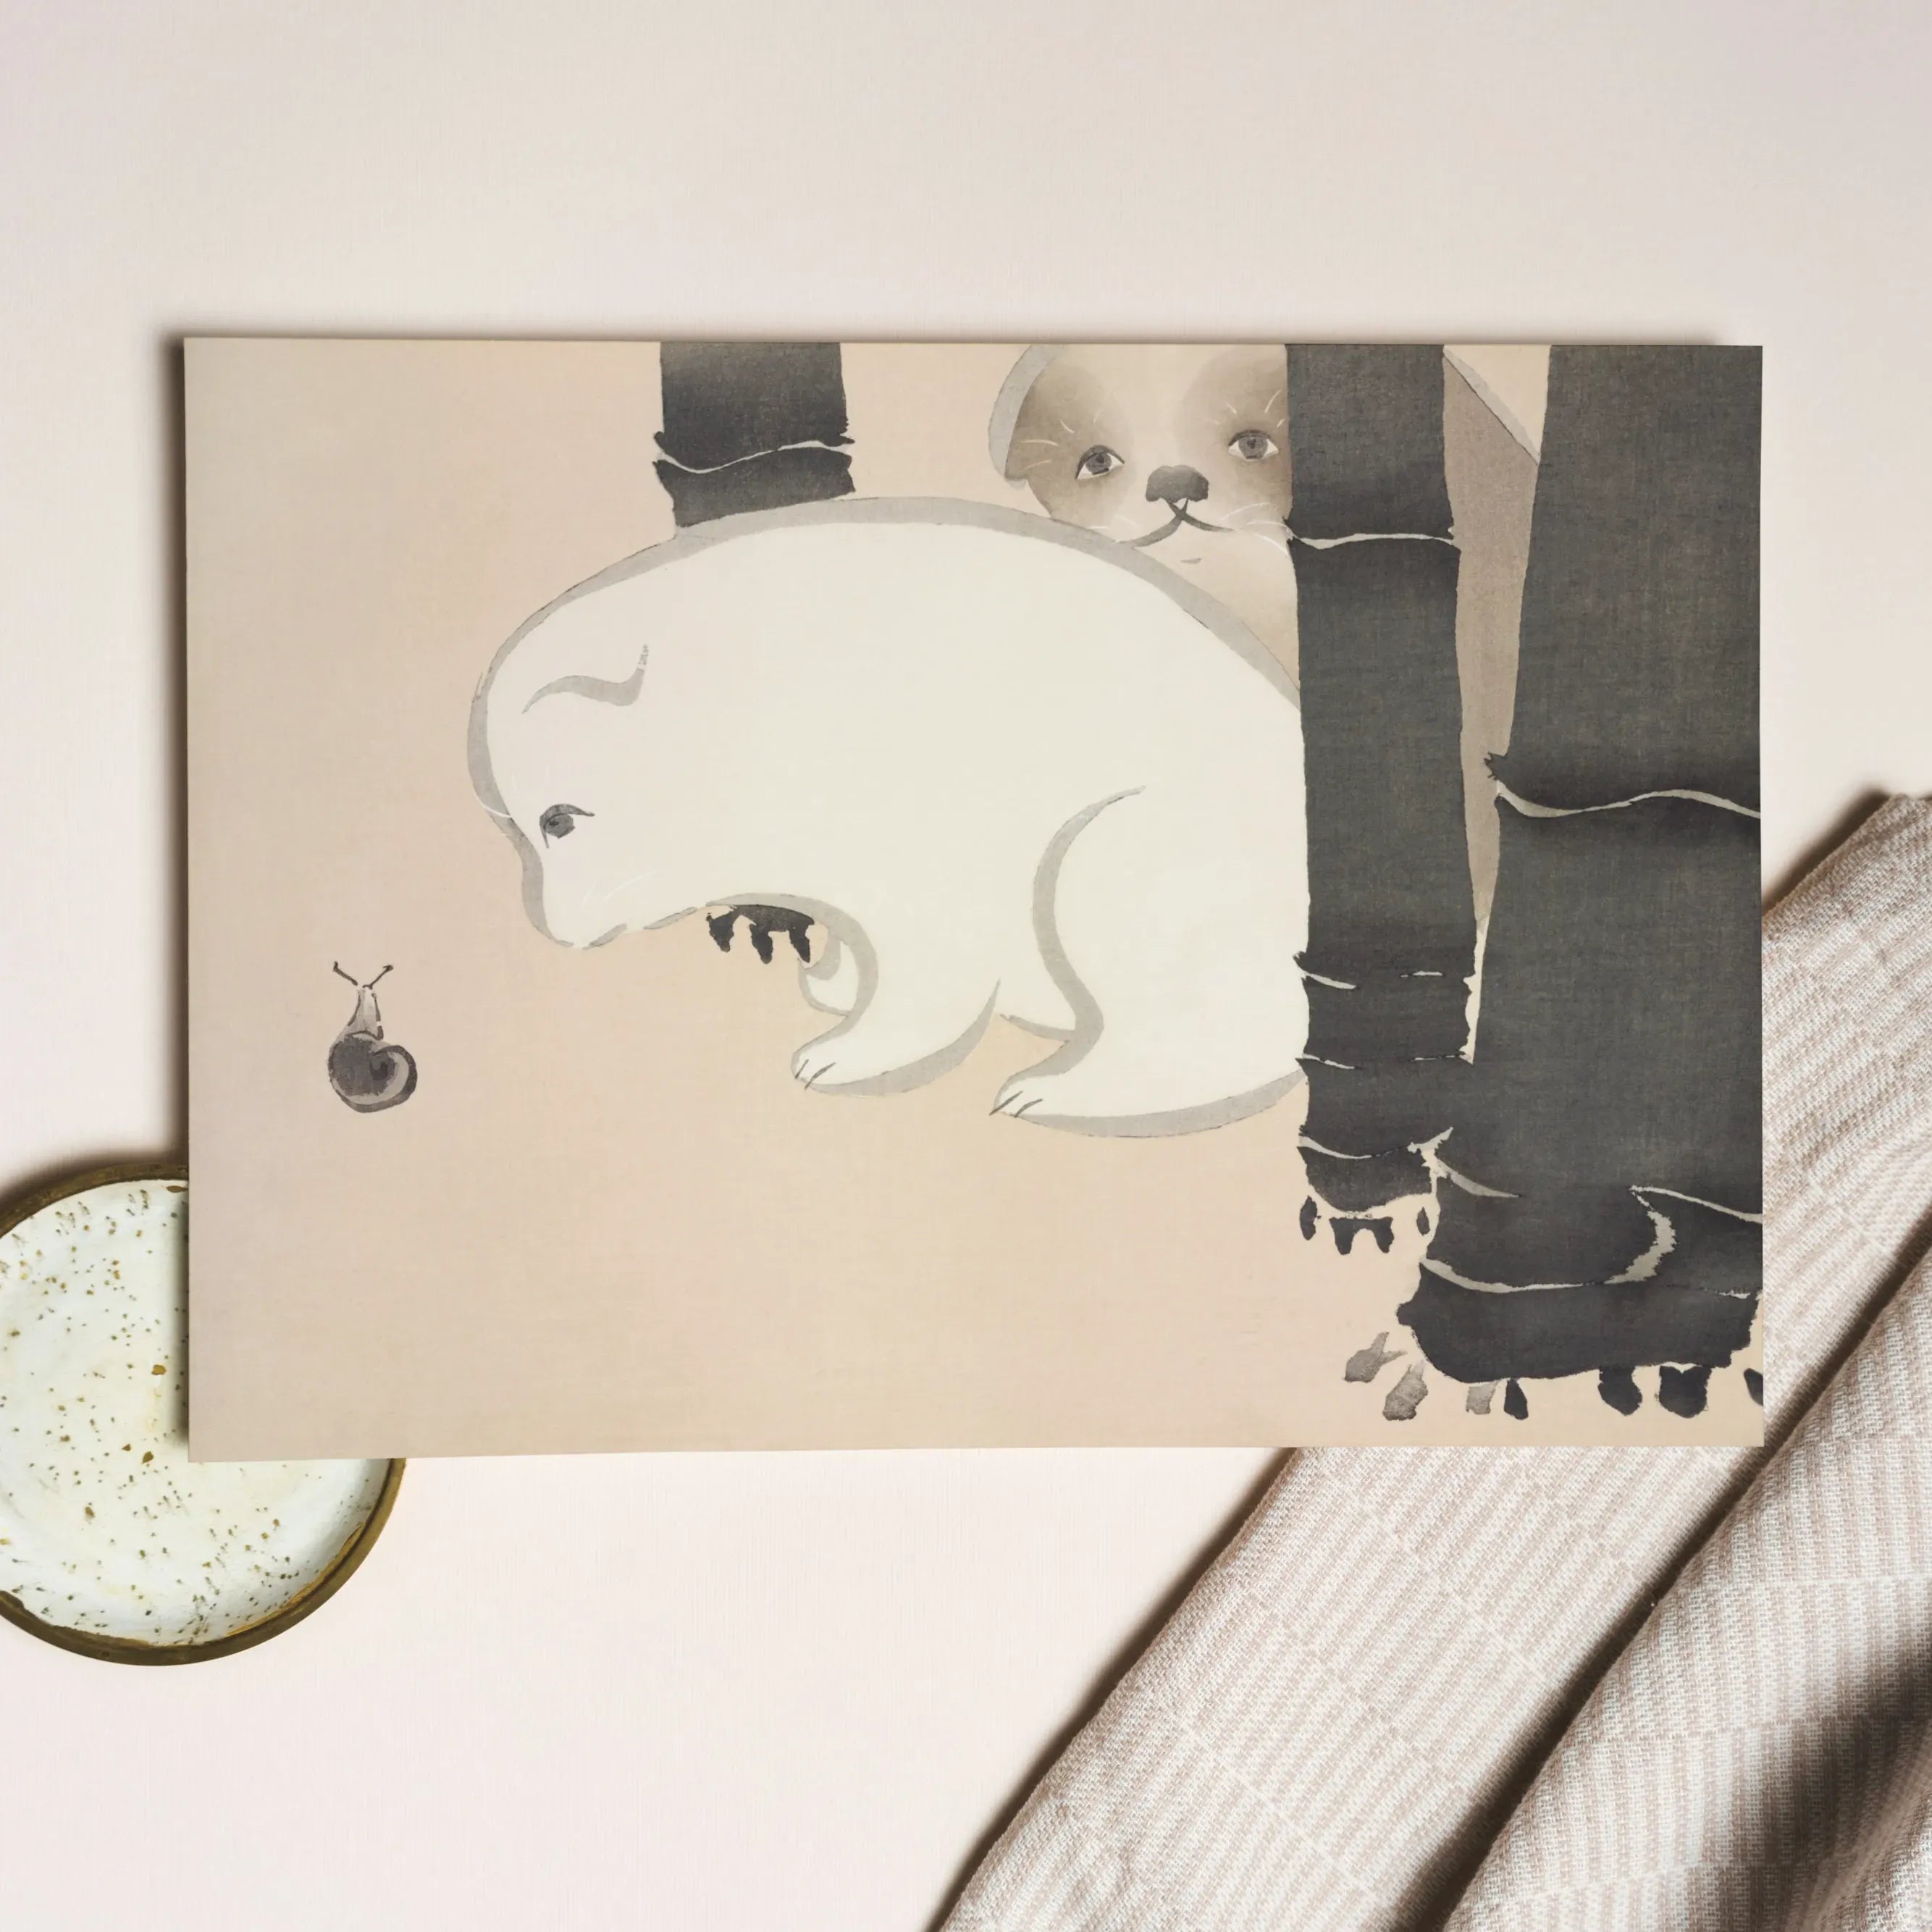 Dog And Snail - Kamisaka Sekka Kacho-e Art Greeting Card - Greeting & Note Cards - Aesthetic Art